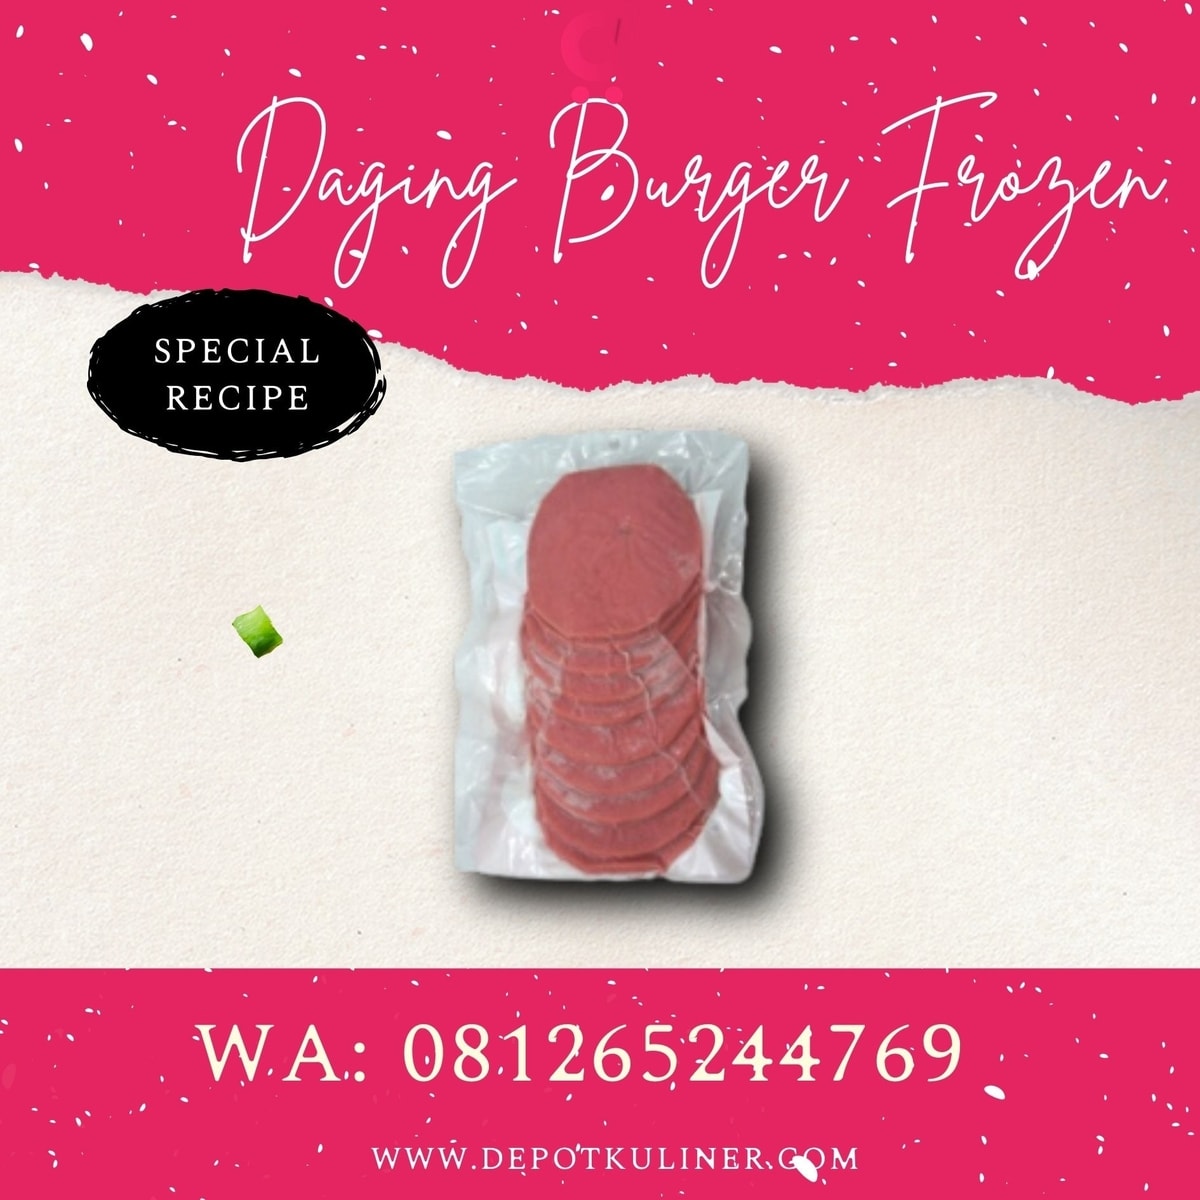 Daging Burger Frozen FAST RESPON, WA 0812-6524-4769